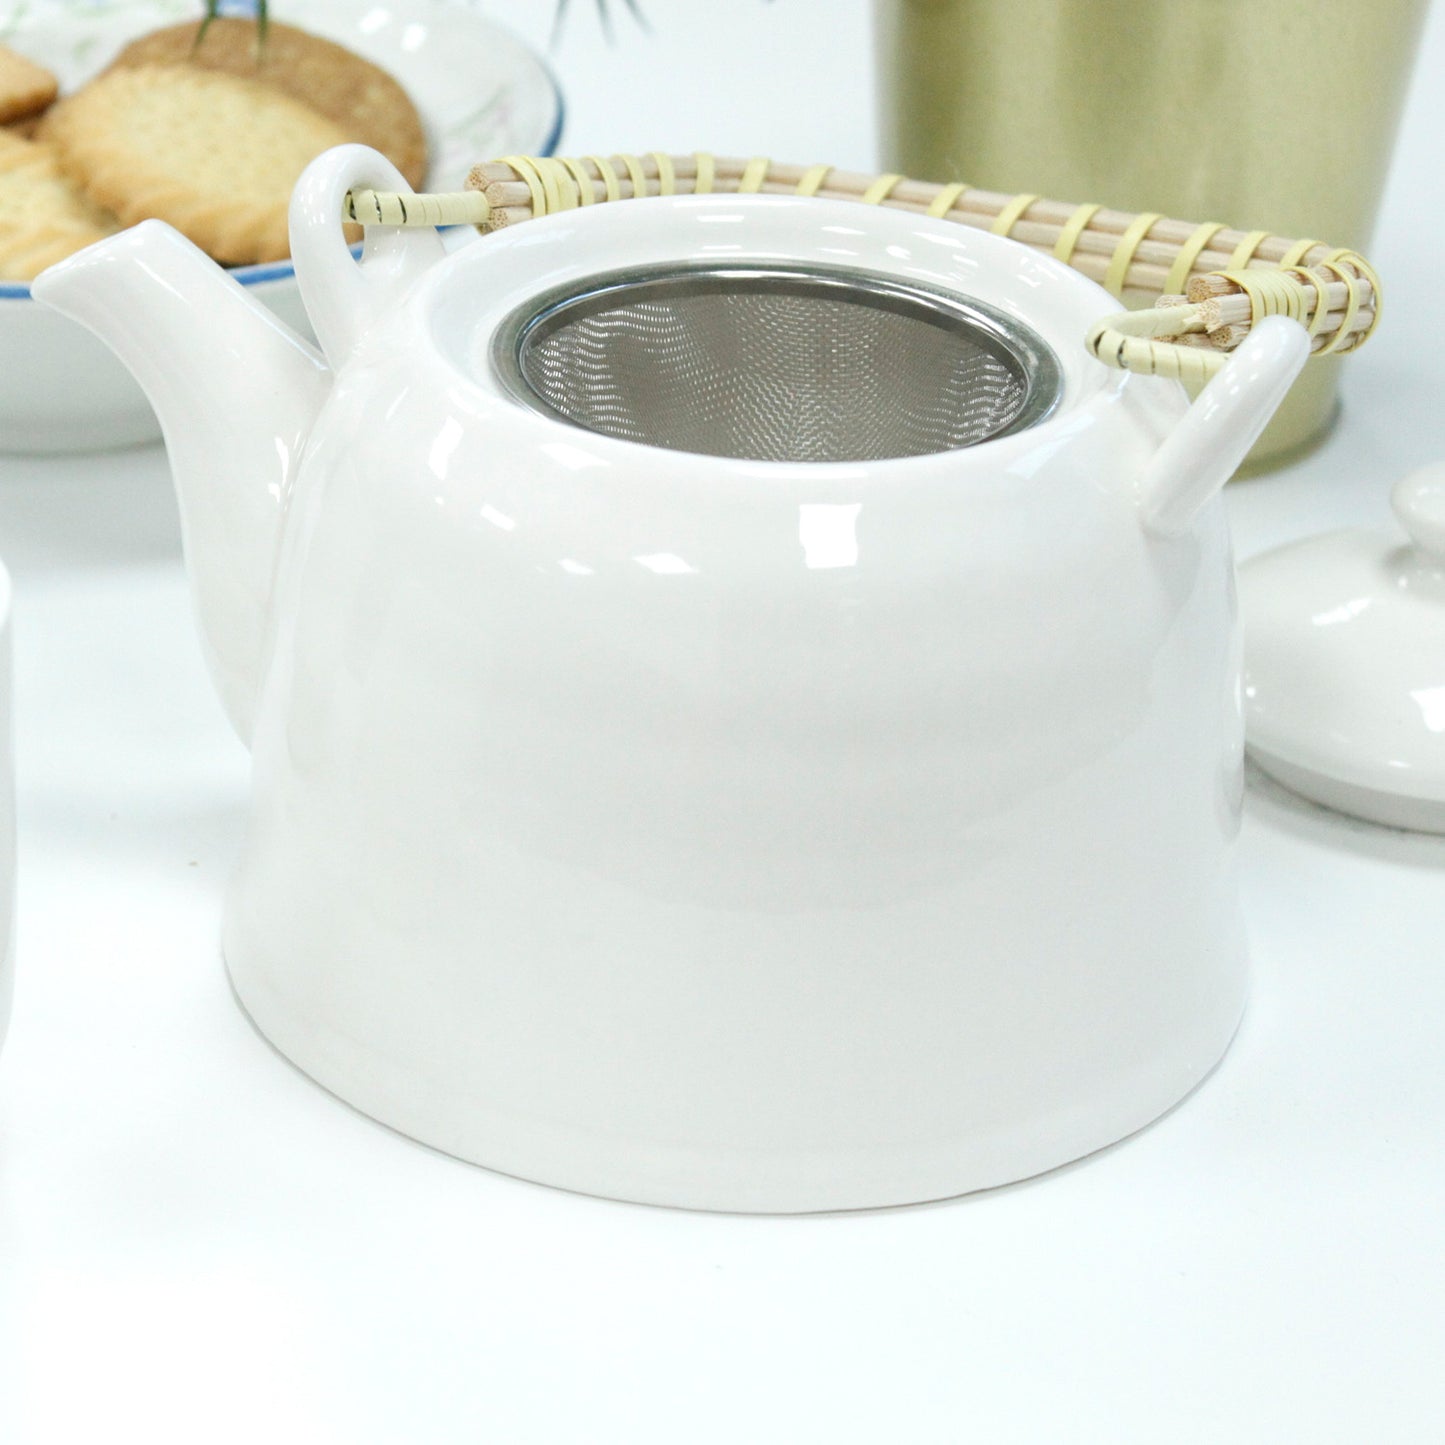 Herbal Teapot Set - Classic White